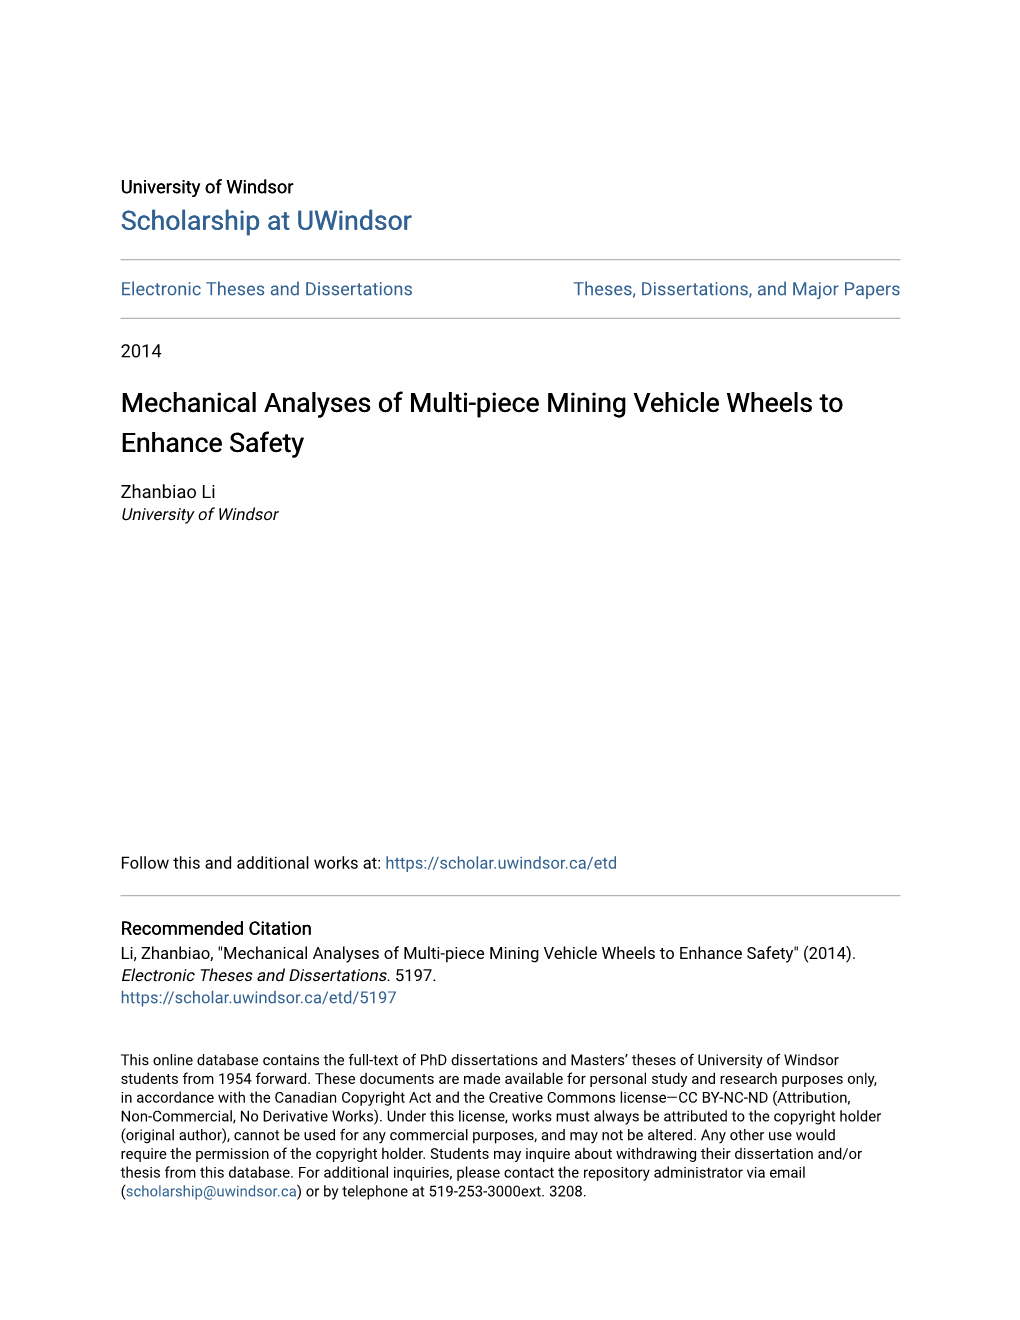 Mechanical Analyses of Multi-Piece Mining Vehicle Wheels to Enhance Safety